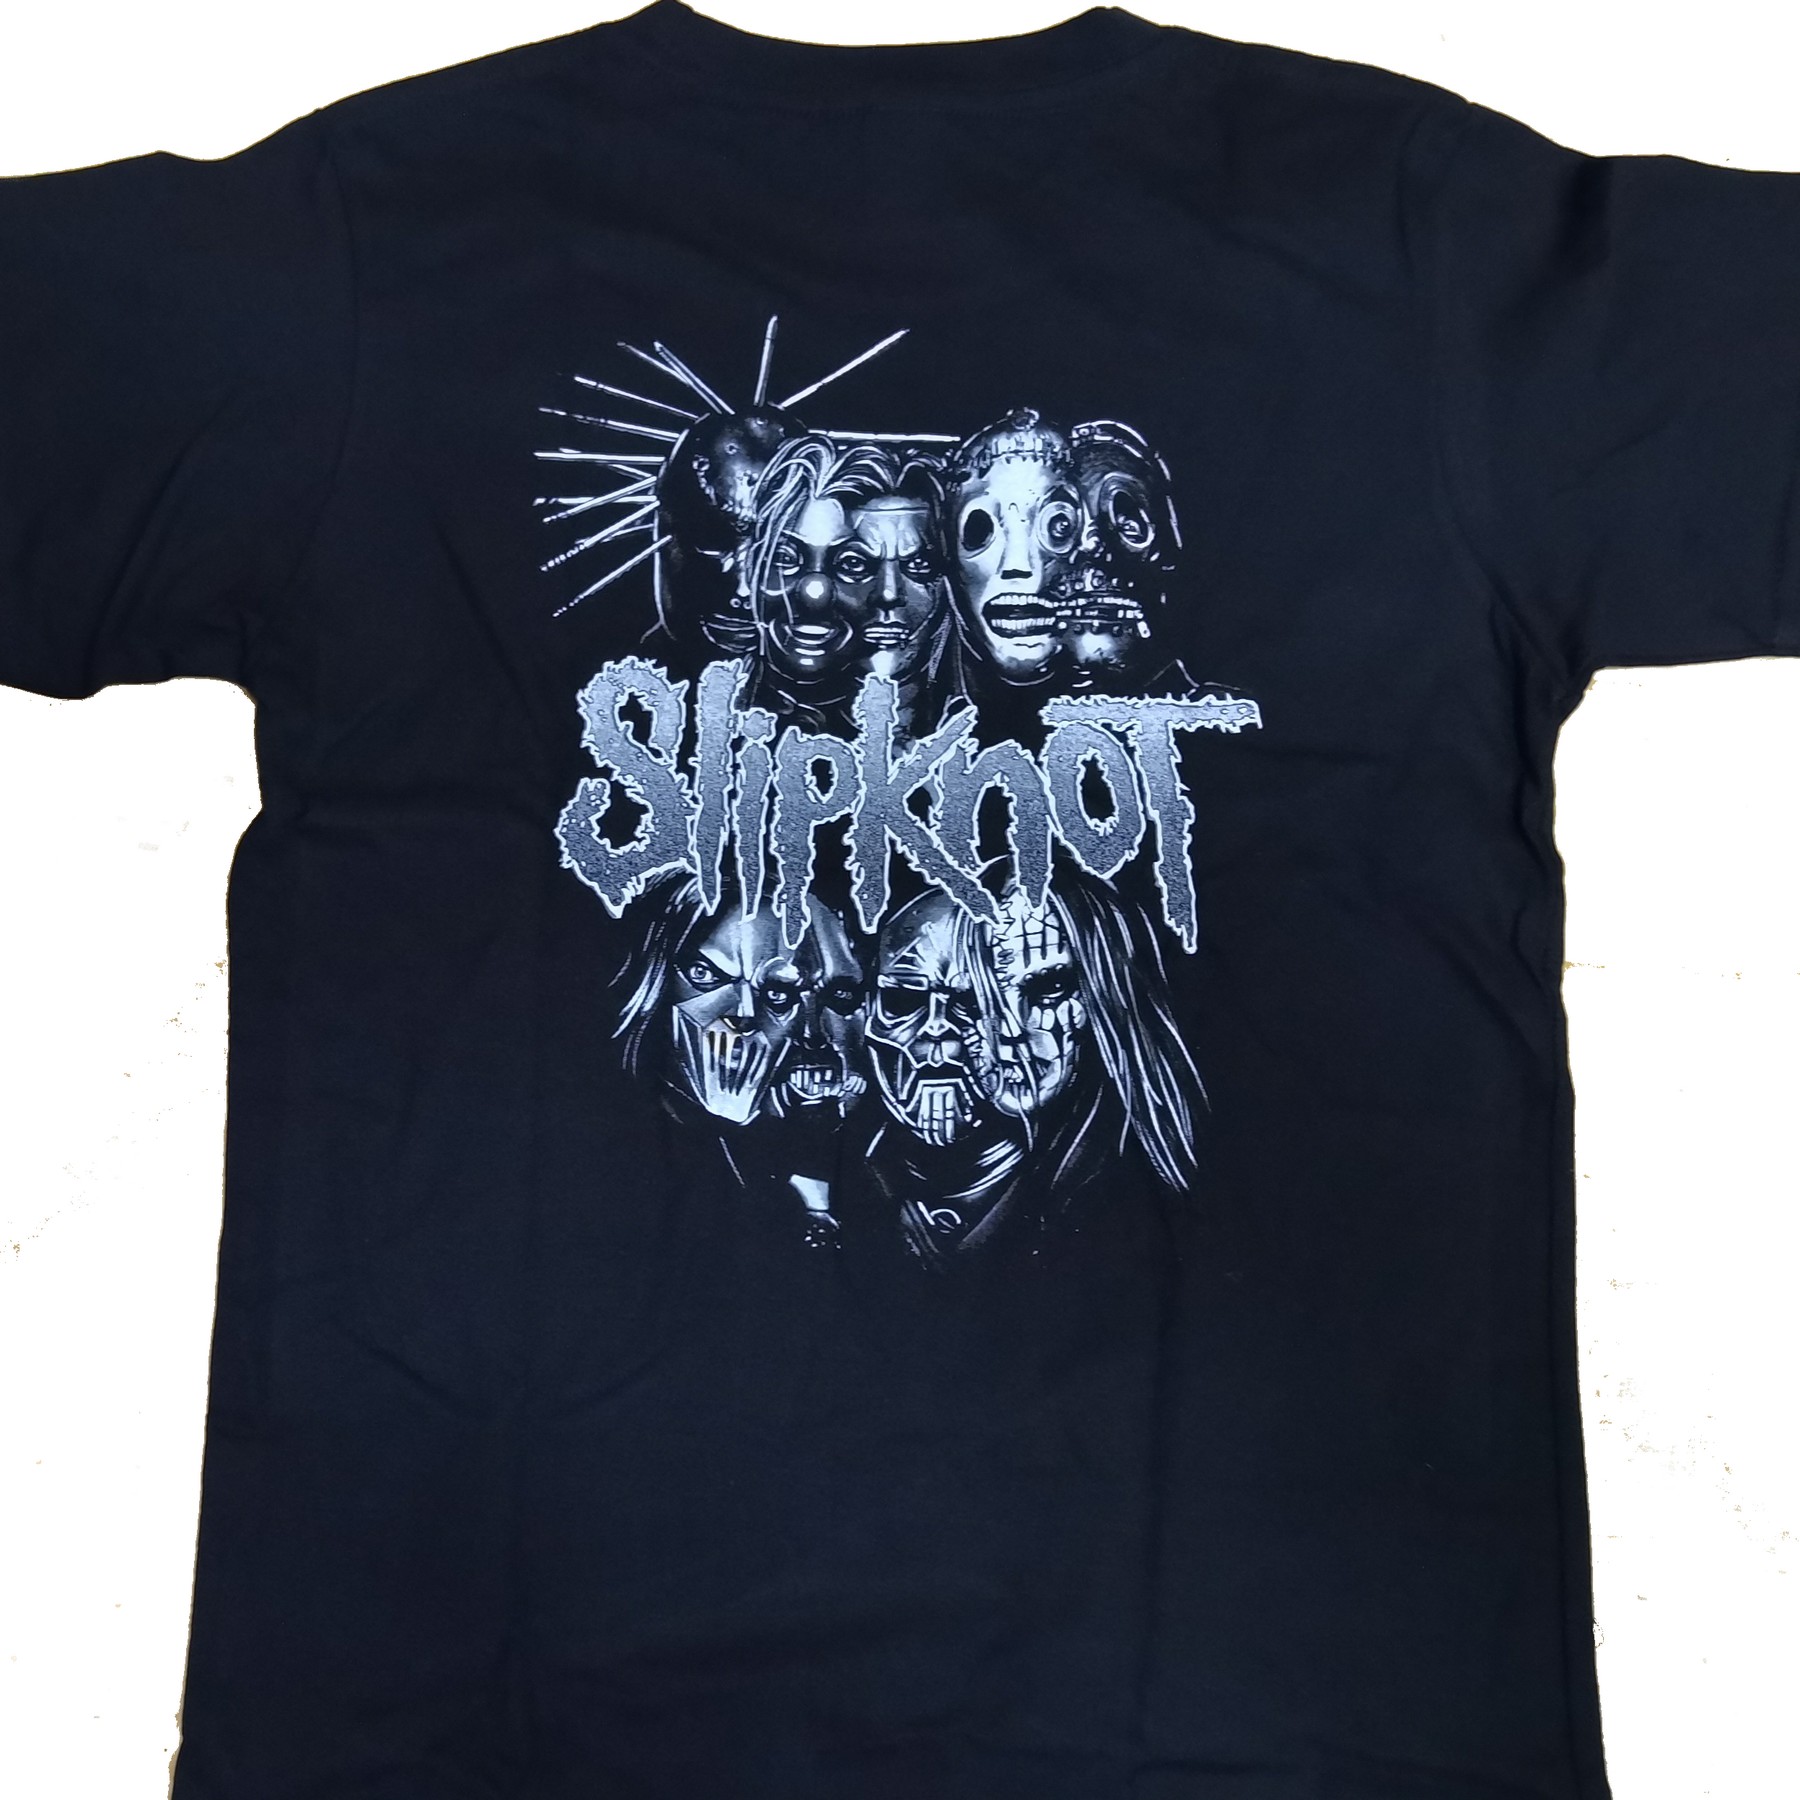 Slipknot t-shirt size 2-4 years